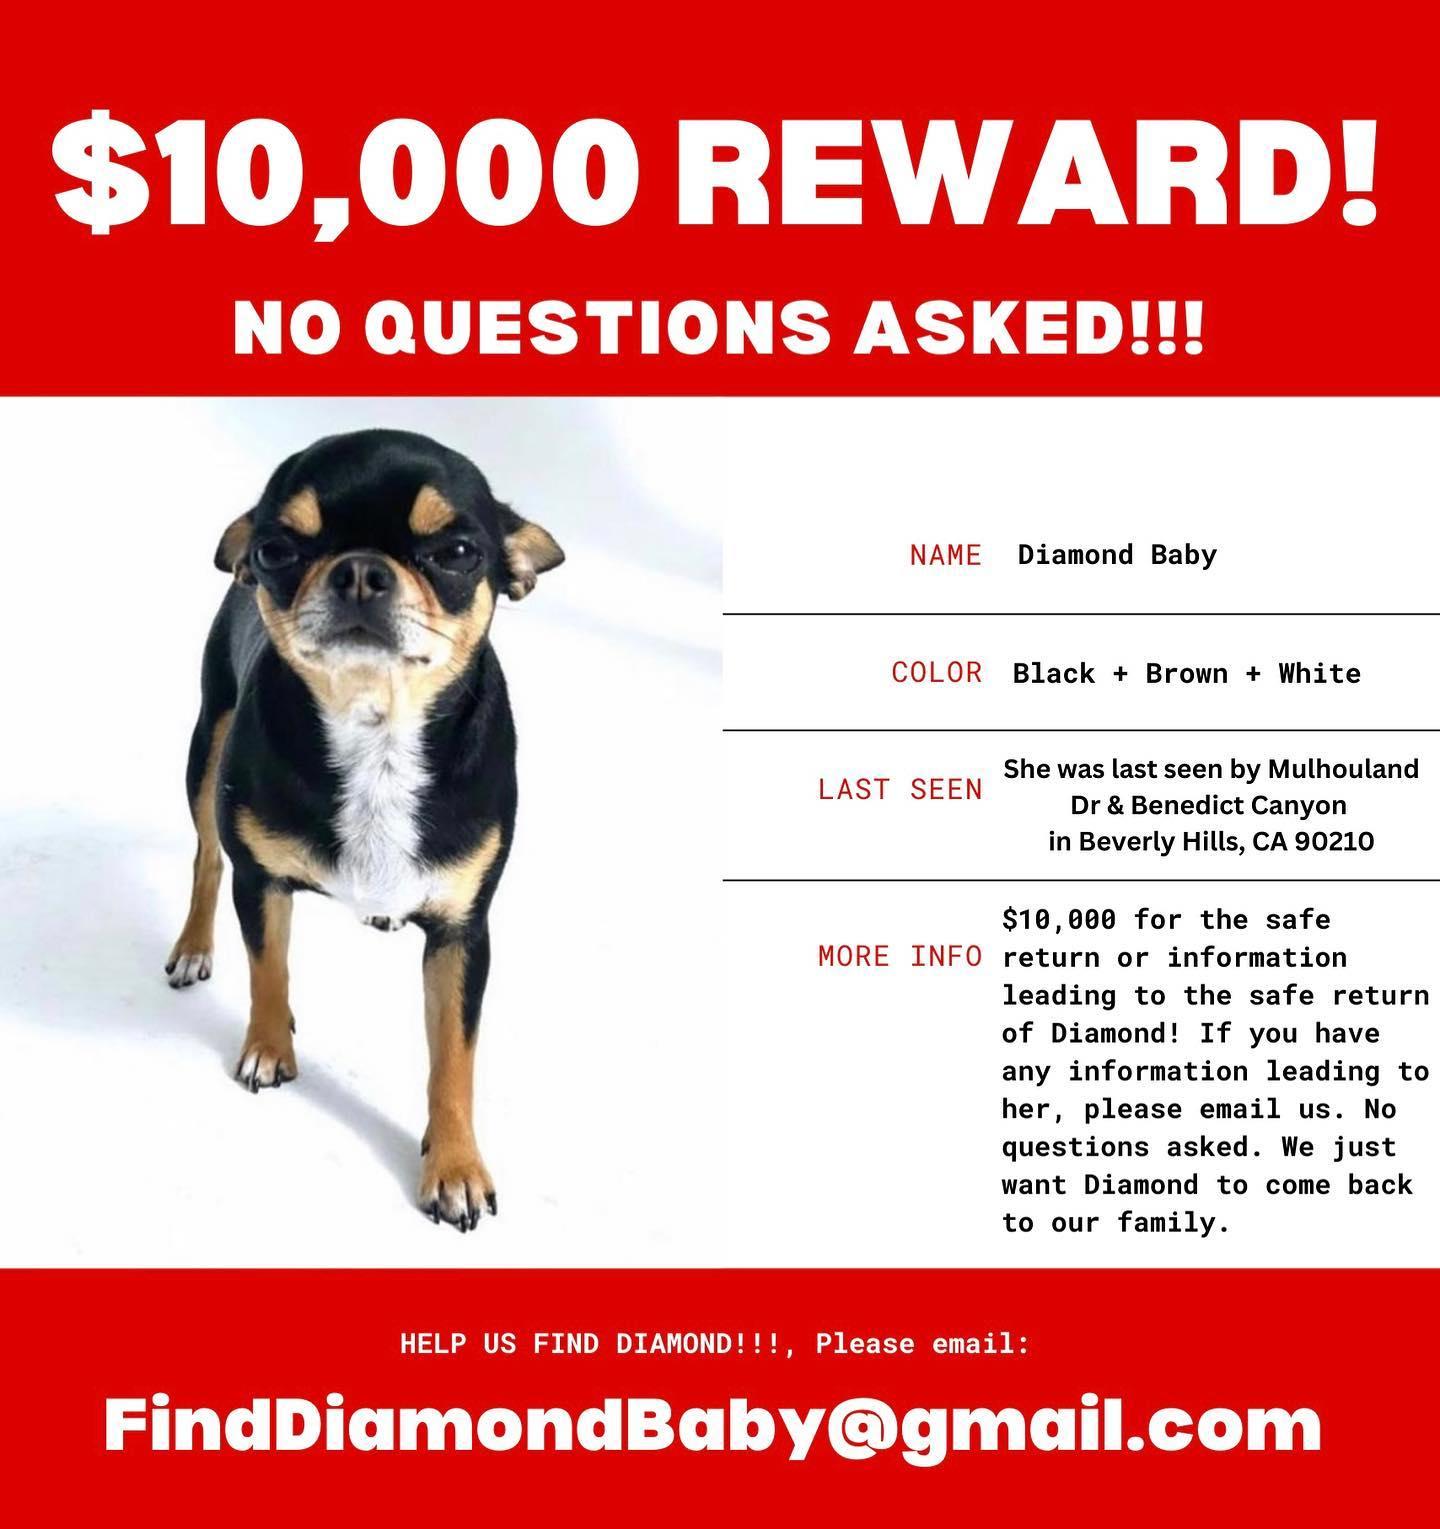 Paris Hilton's reward poster to find Diamond Baby